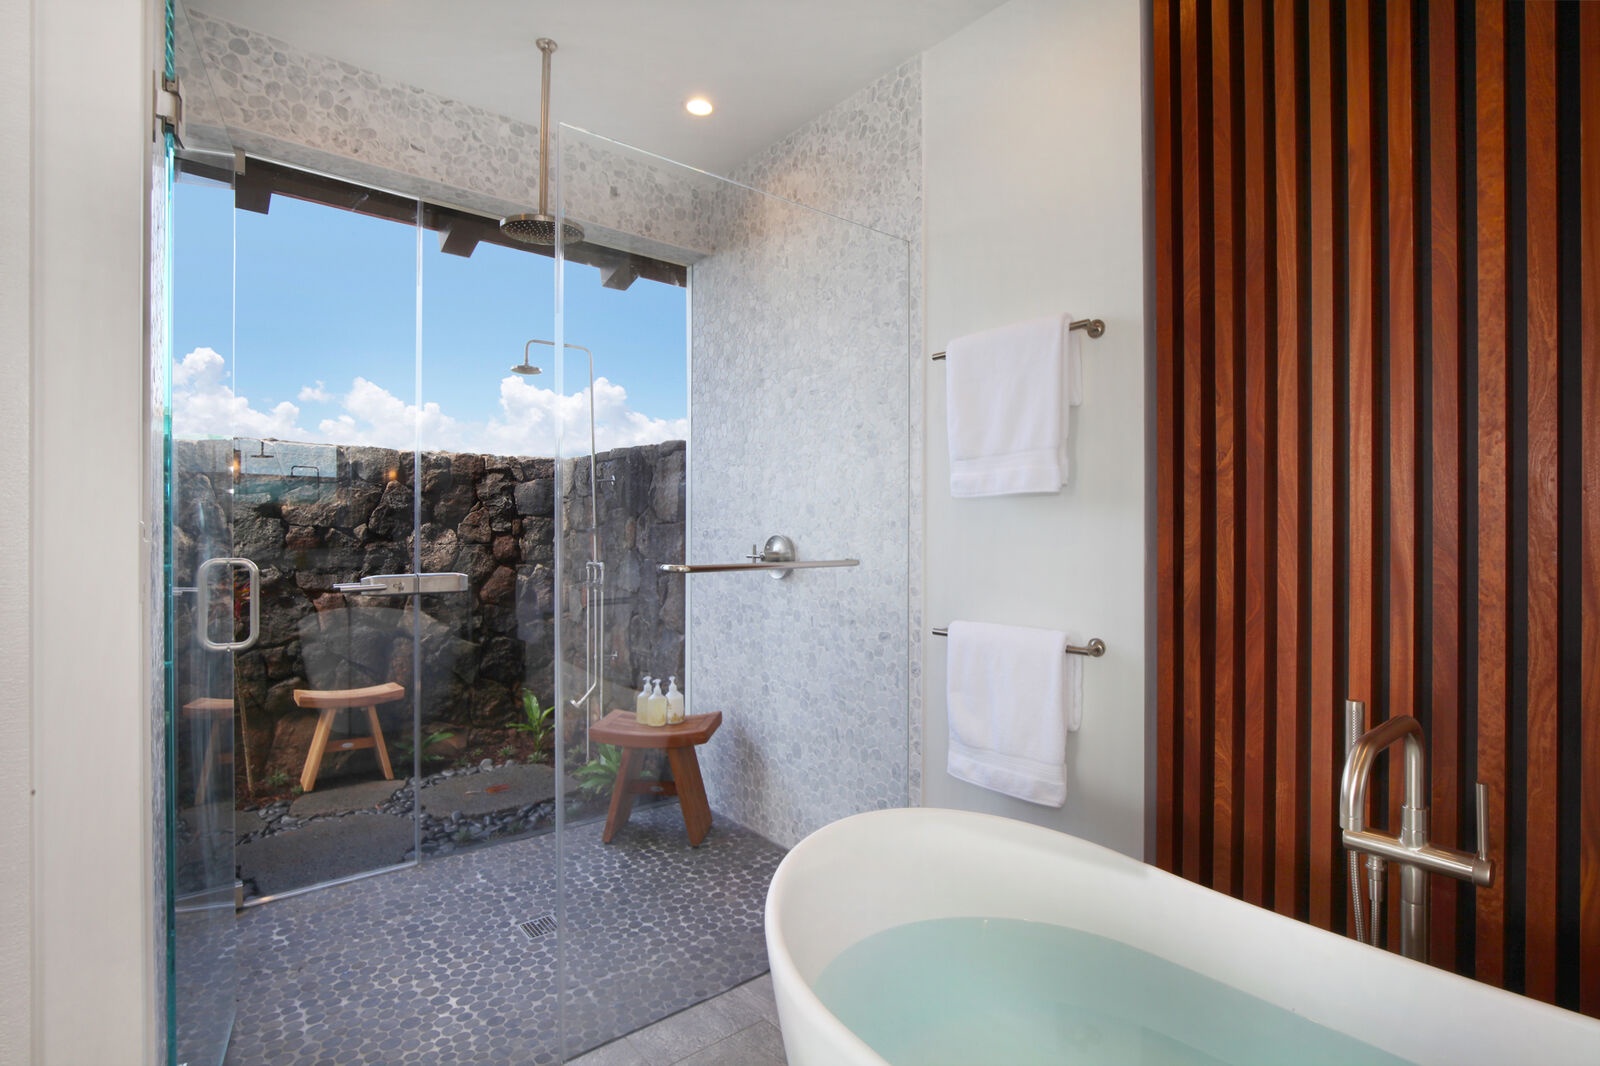 Koloa Vacation Rentals, Hale Kainani #6 E Komo Mai - Primary 2 bathroom with outdoor lava rock shower